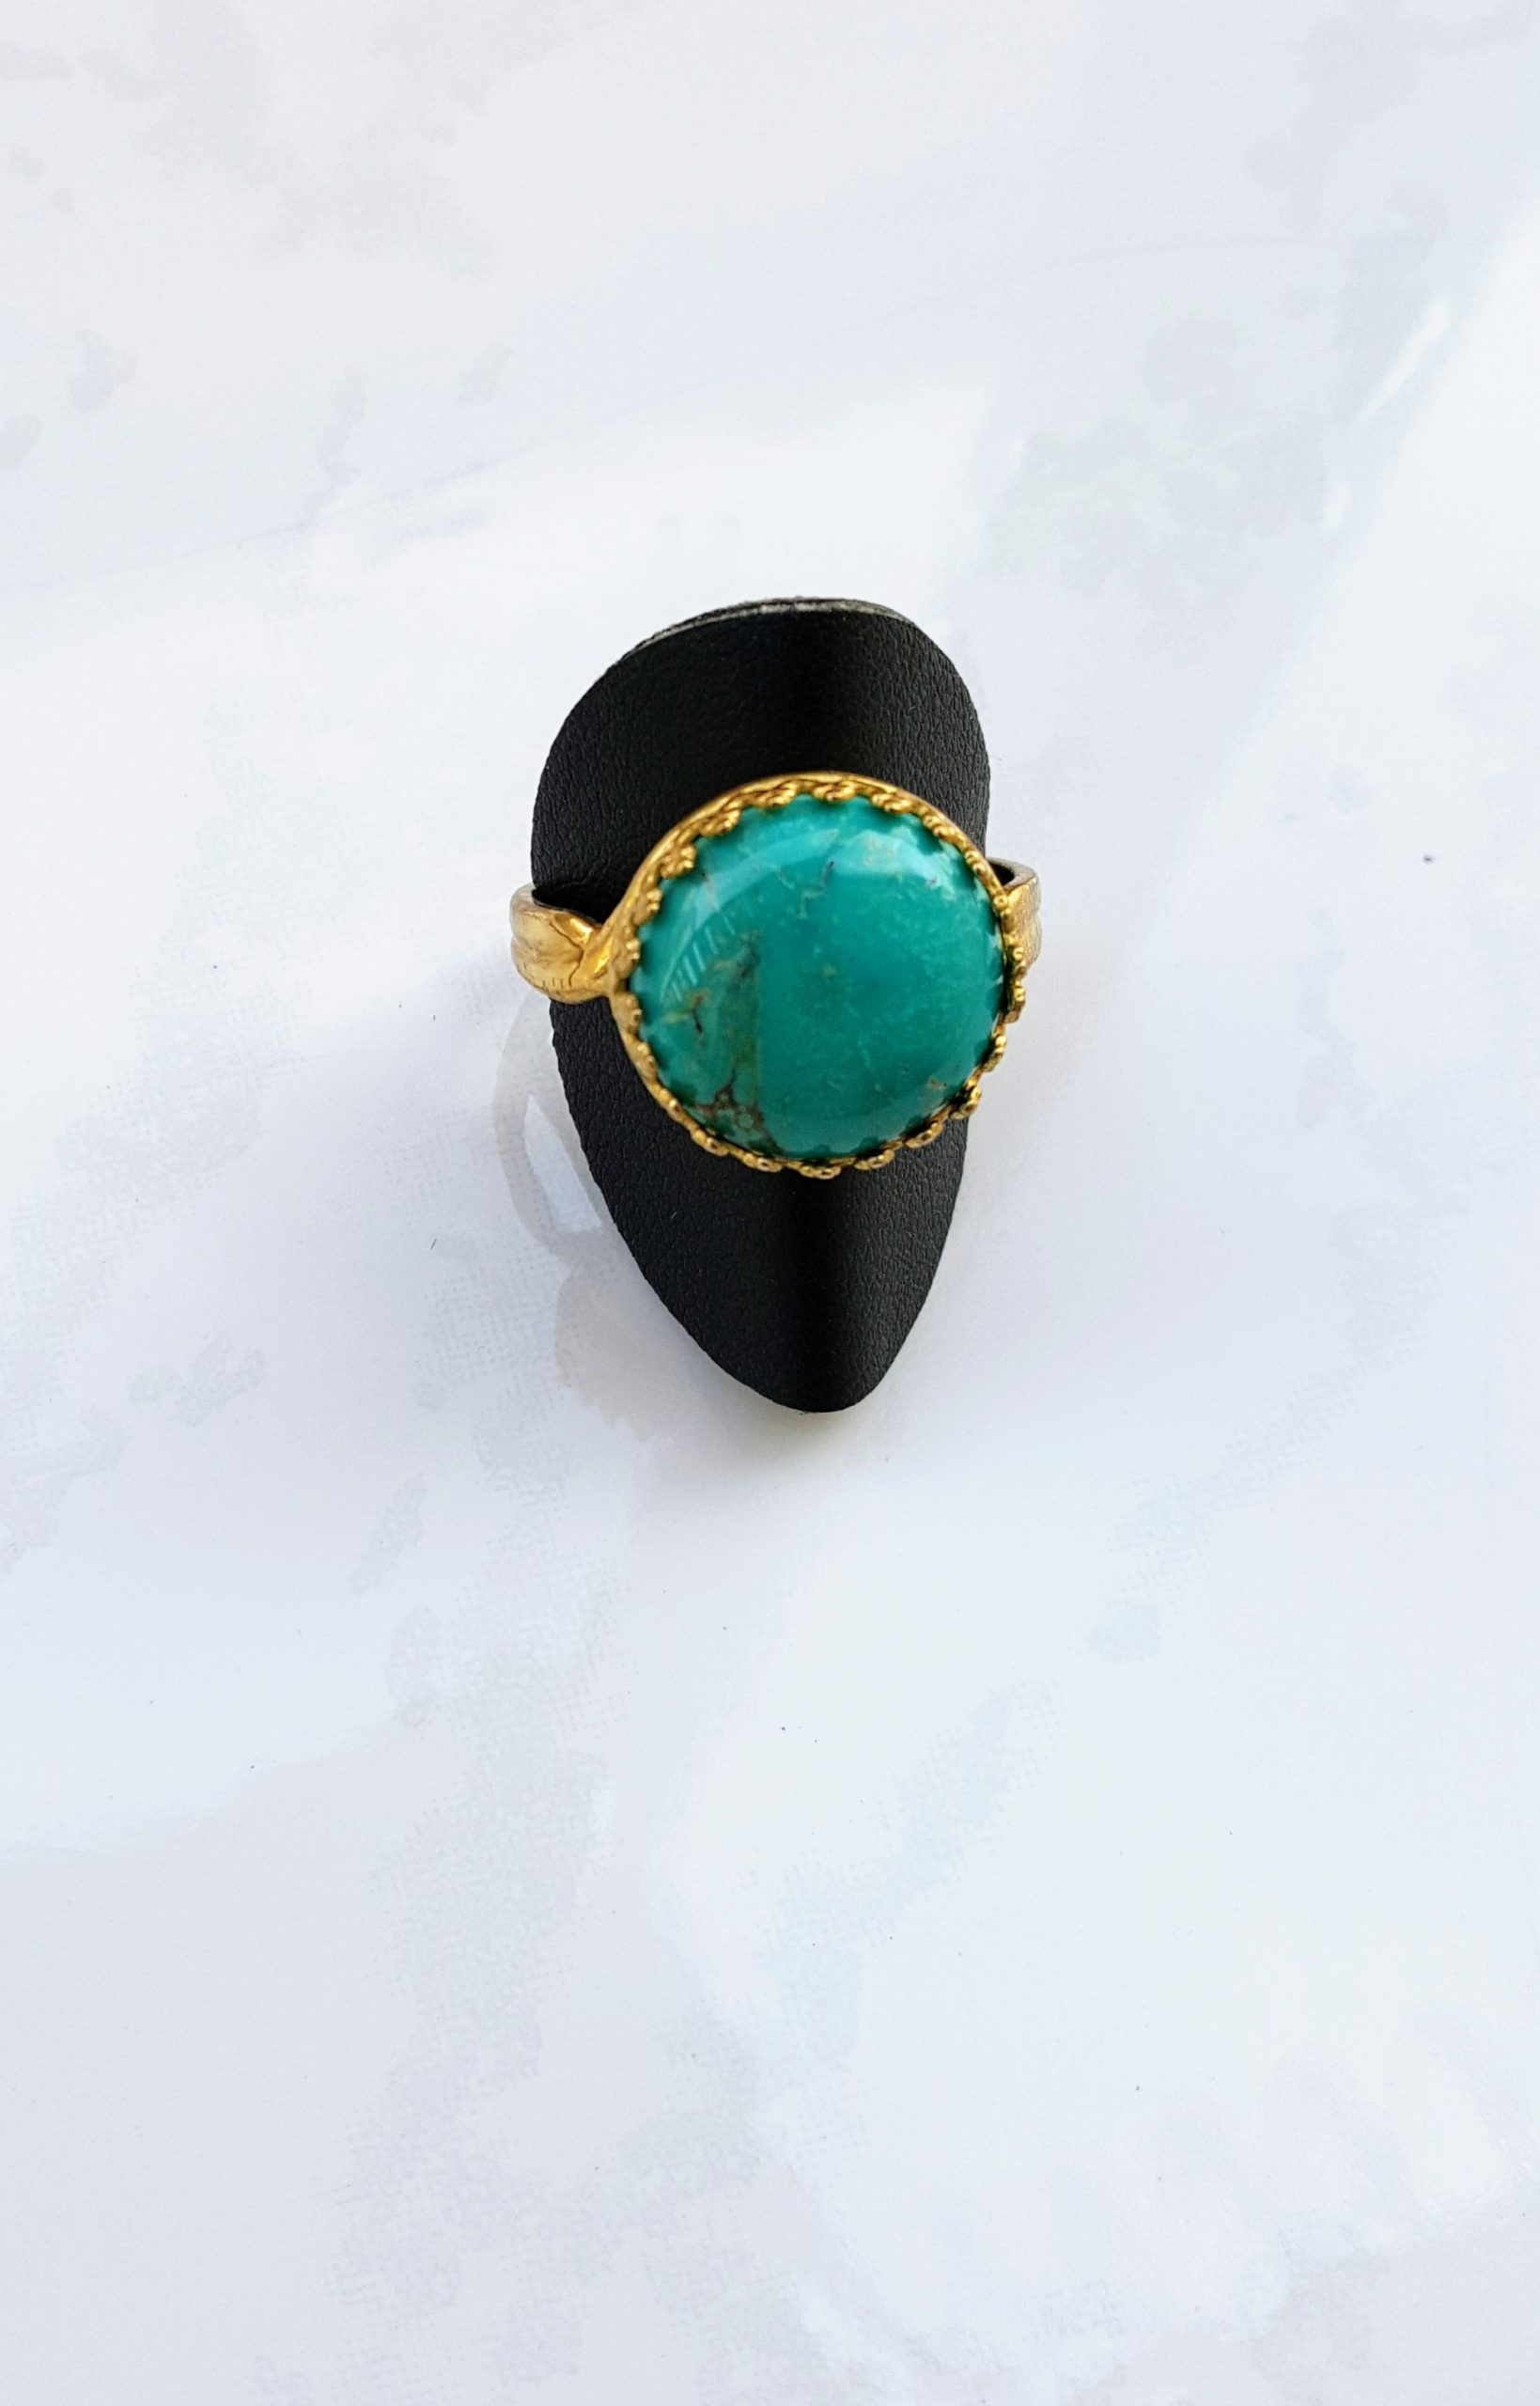 14K Real Solid Gold Turquoise Evil Eye Ring For Women December Birthstone